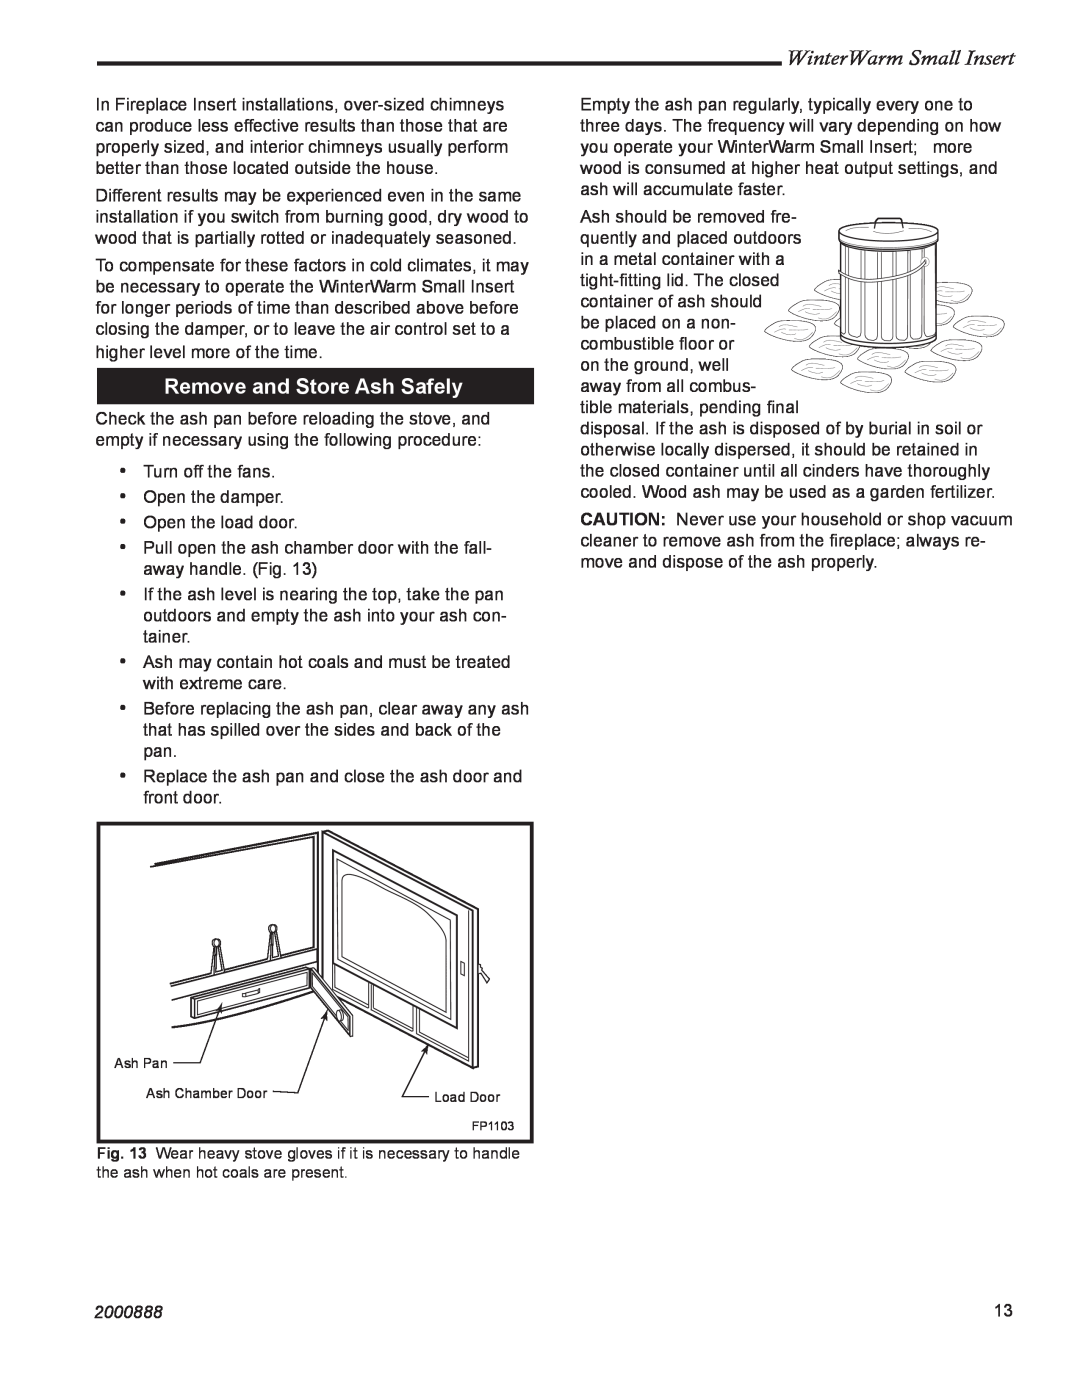 CFM Corporation Winter Warm - Small Insert Remove and Store Ash Safely, WinterWarm Small Insert, 2000888 